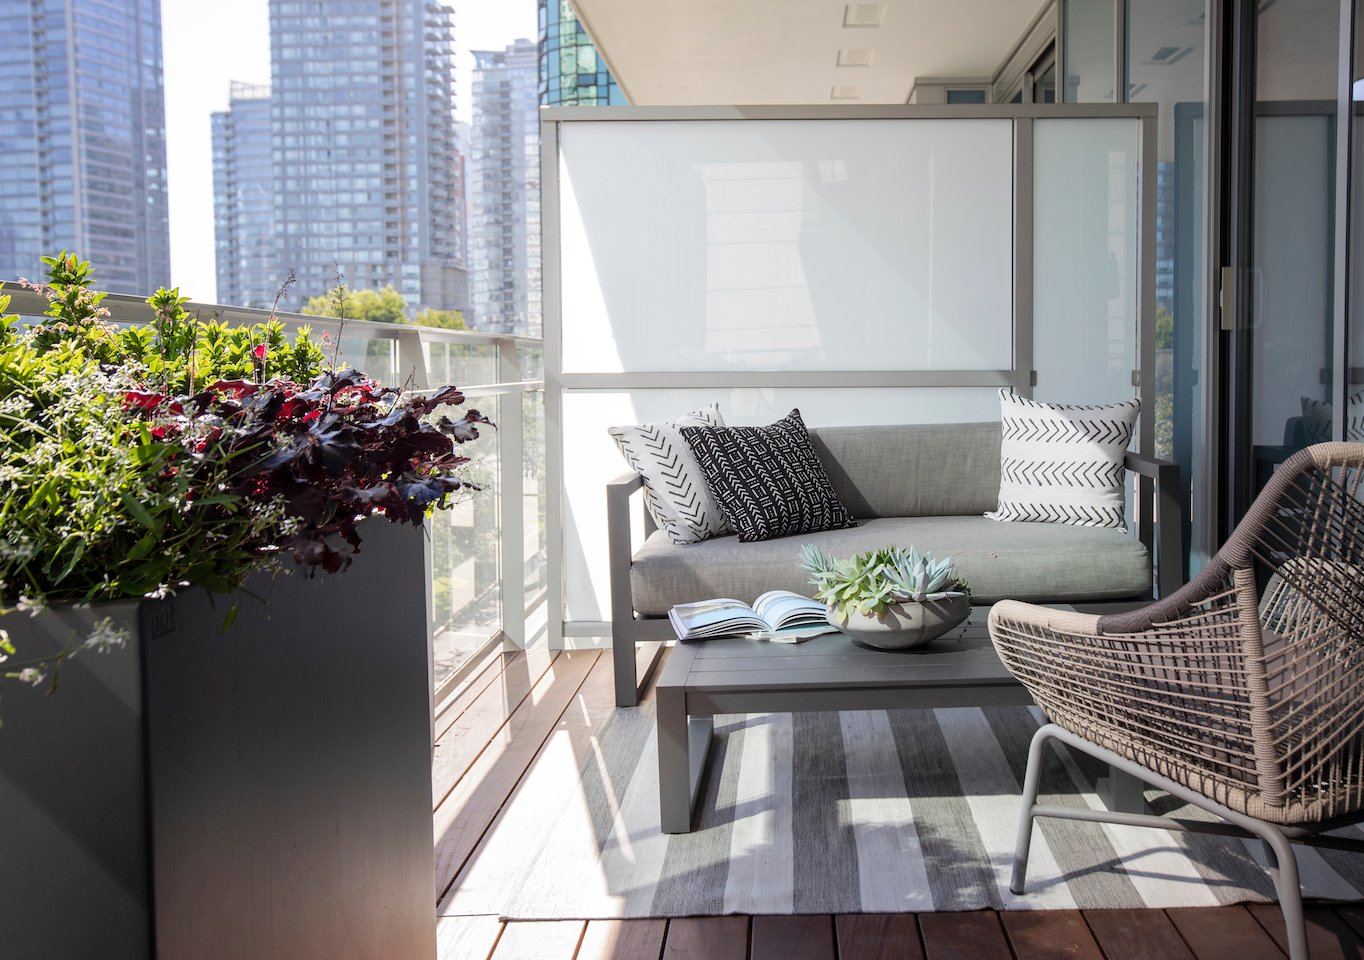 backyard privacy created with an Aloe balcony privacy screen on a condo balcony